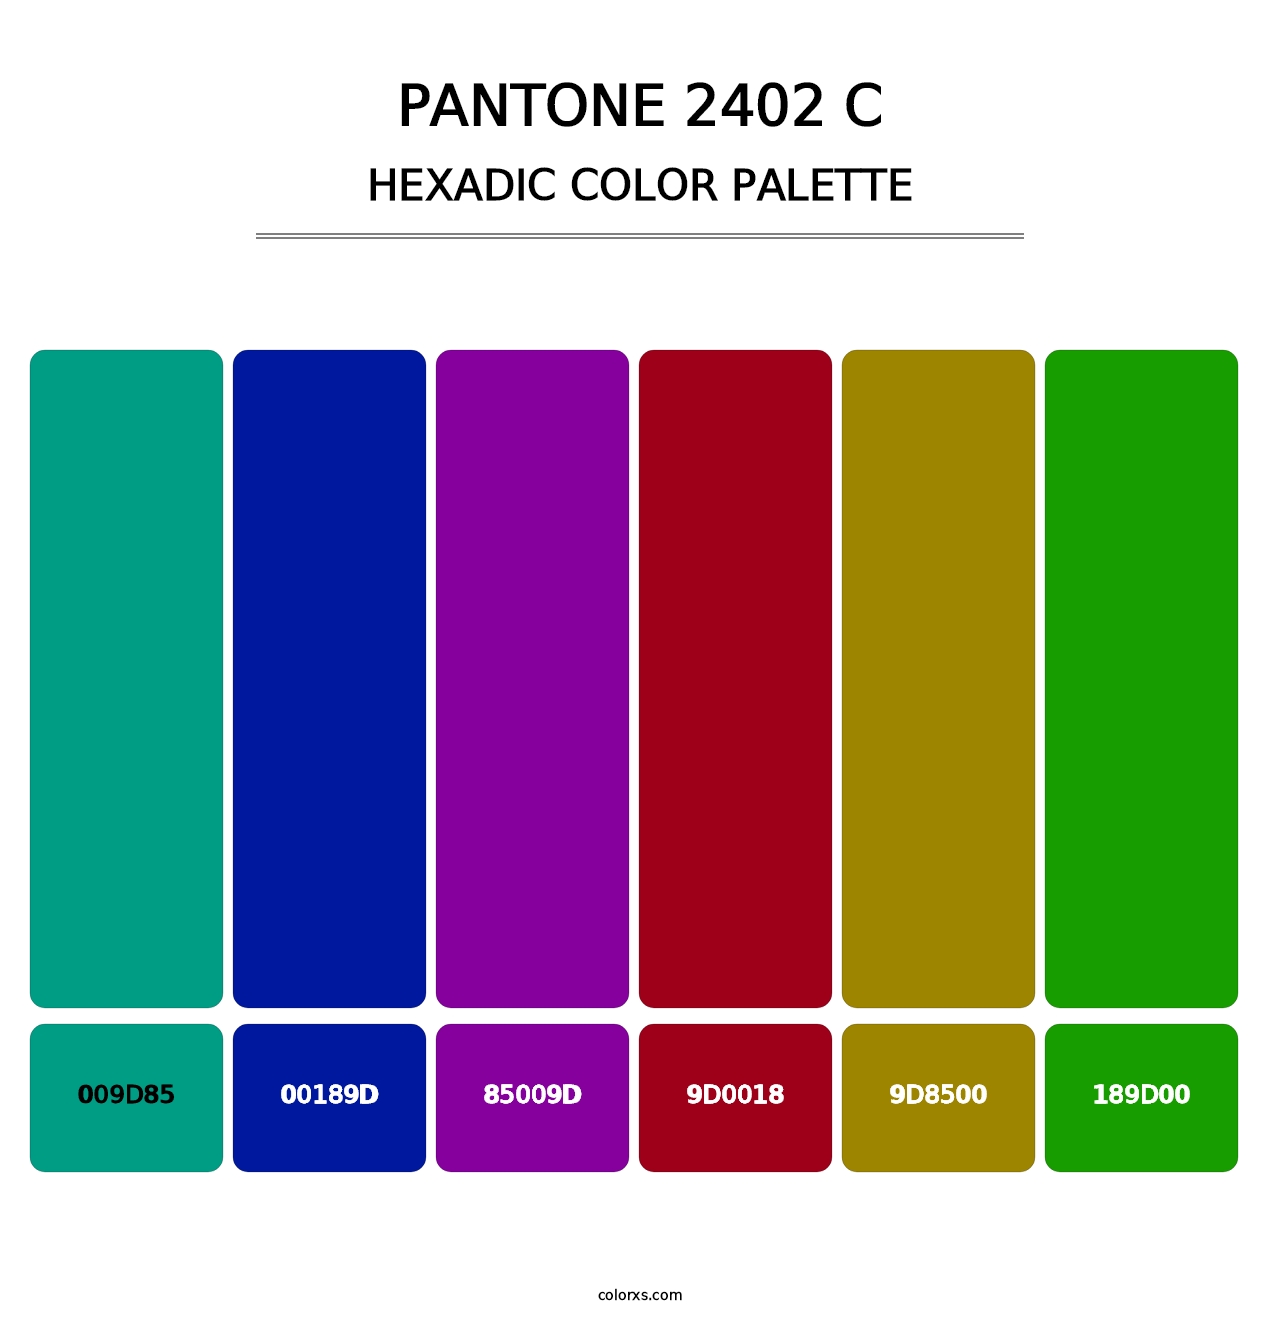 PANTONE 2402 C - Hexadic Color Palette